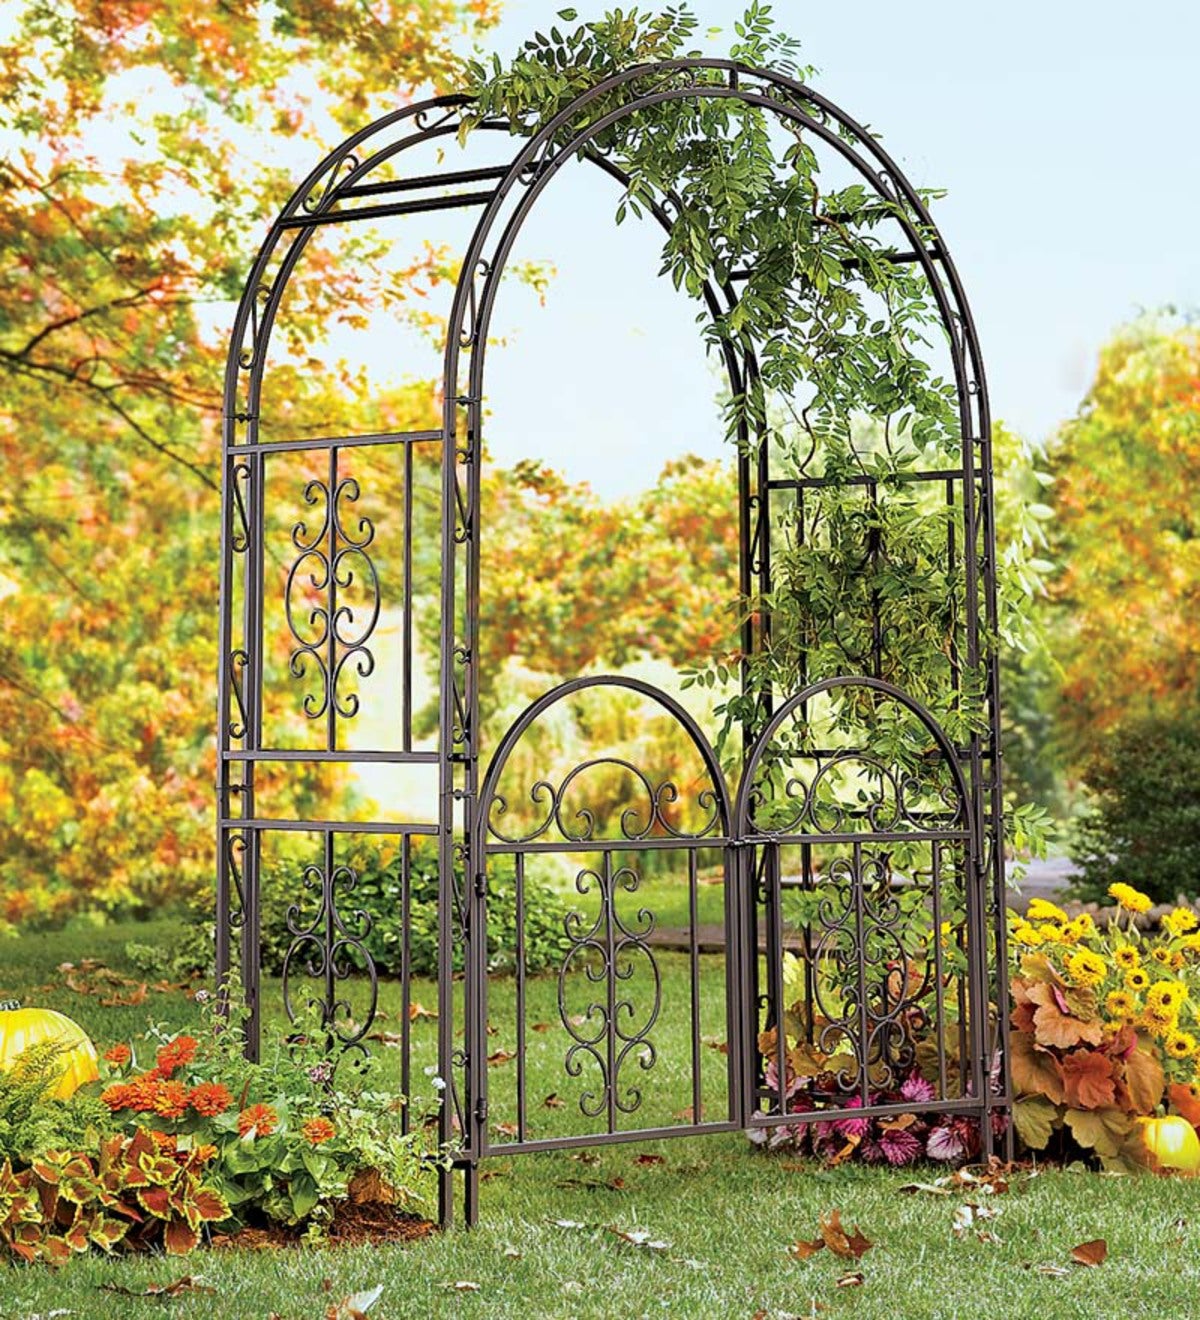 Montebello Iron Garden Arbor with Gate | Garden Accents | Product Types ...